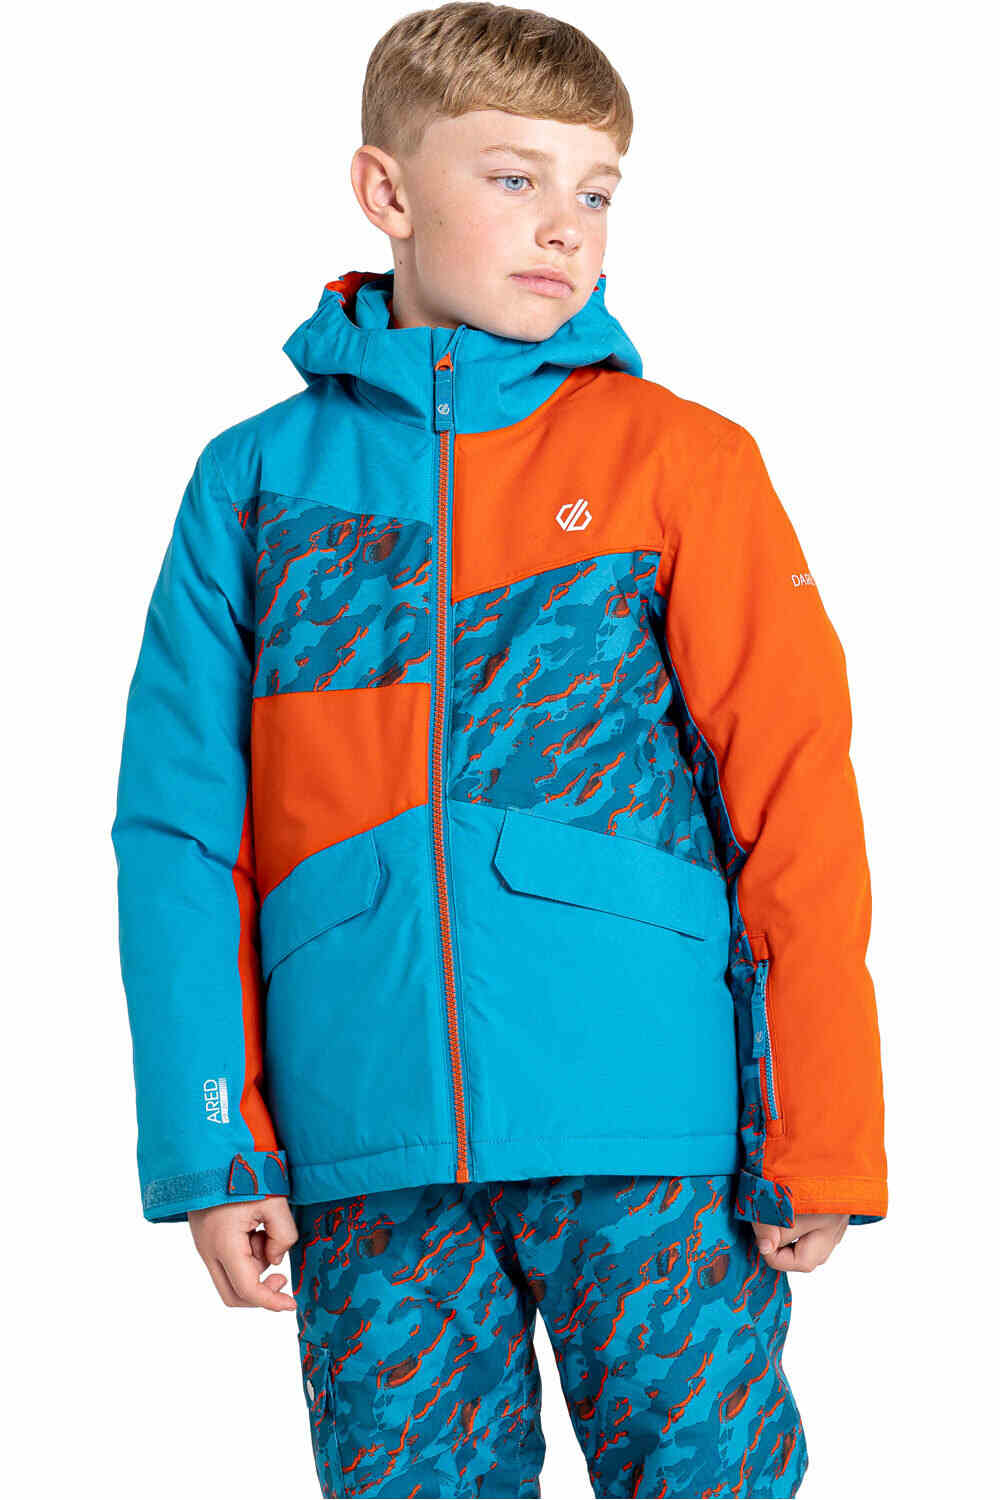 Dare2b chaqueta esquí infantil Glee II Jacket vista frontal